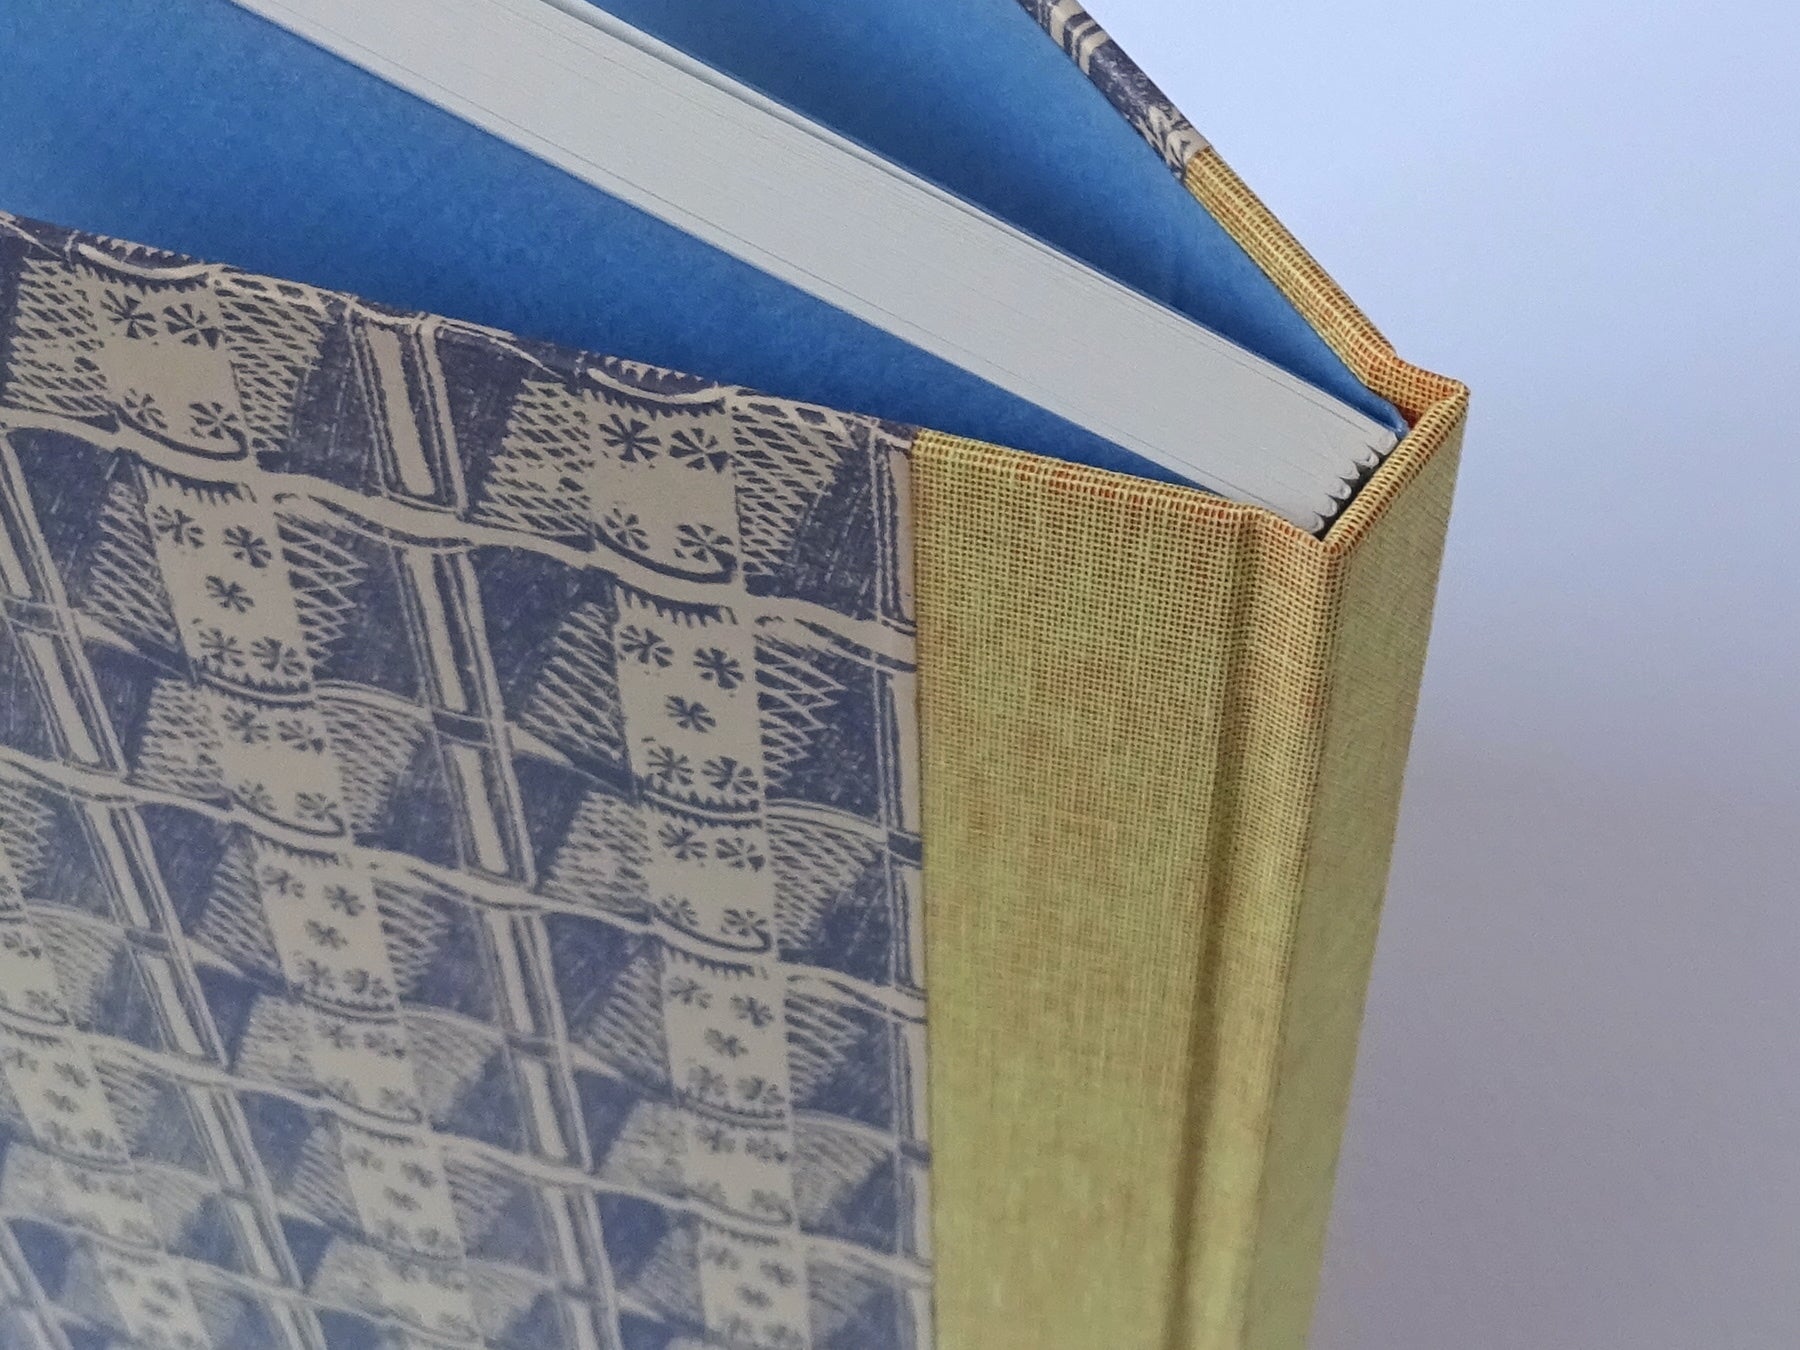 sketchbook with bamboo design enid marx pattern paper spine detail